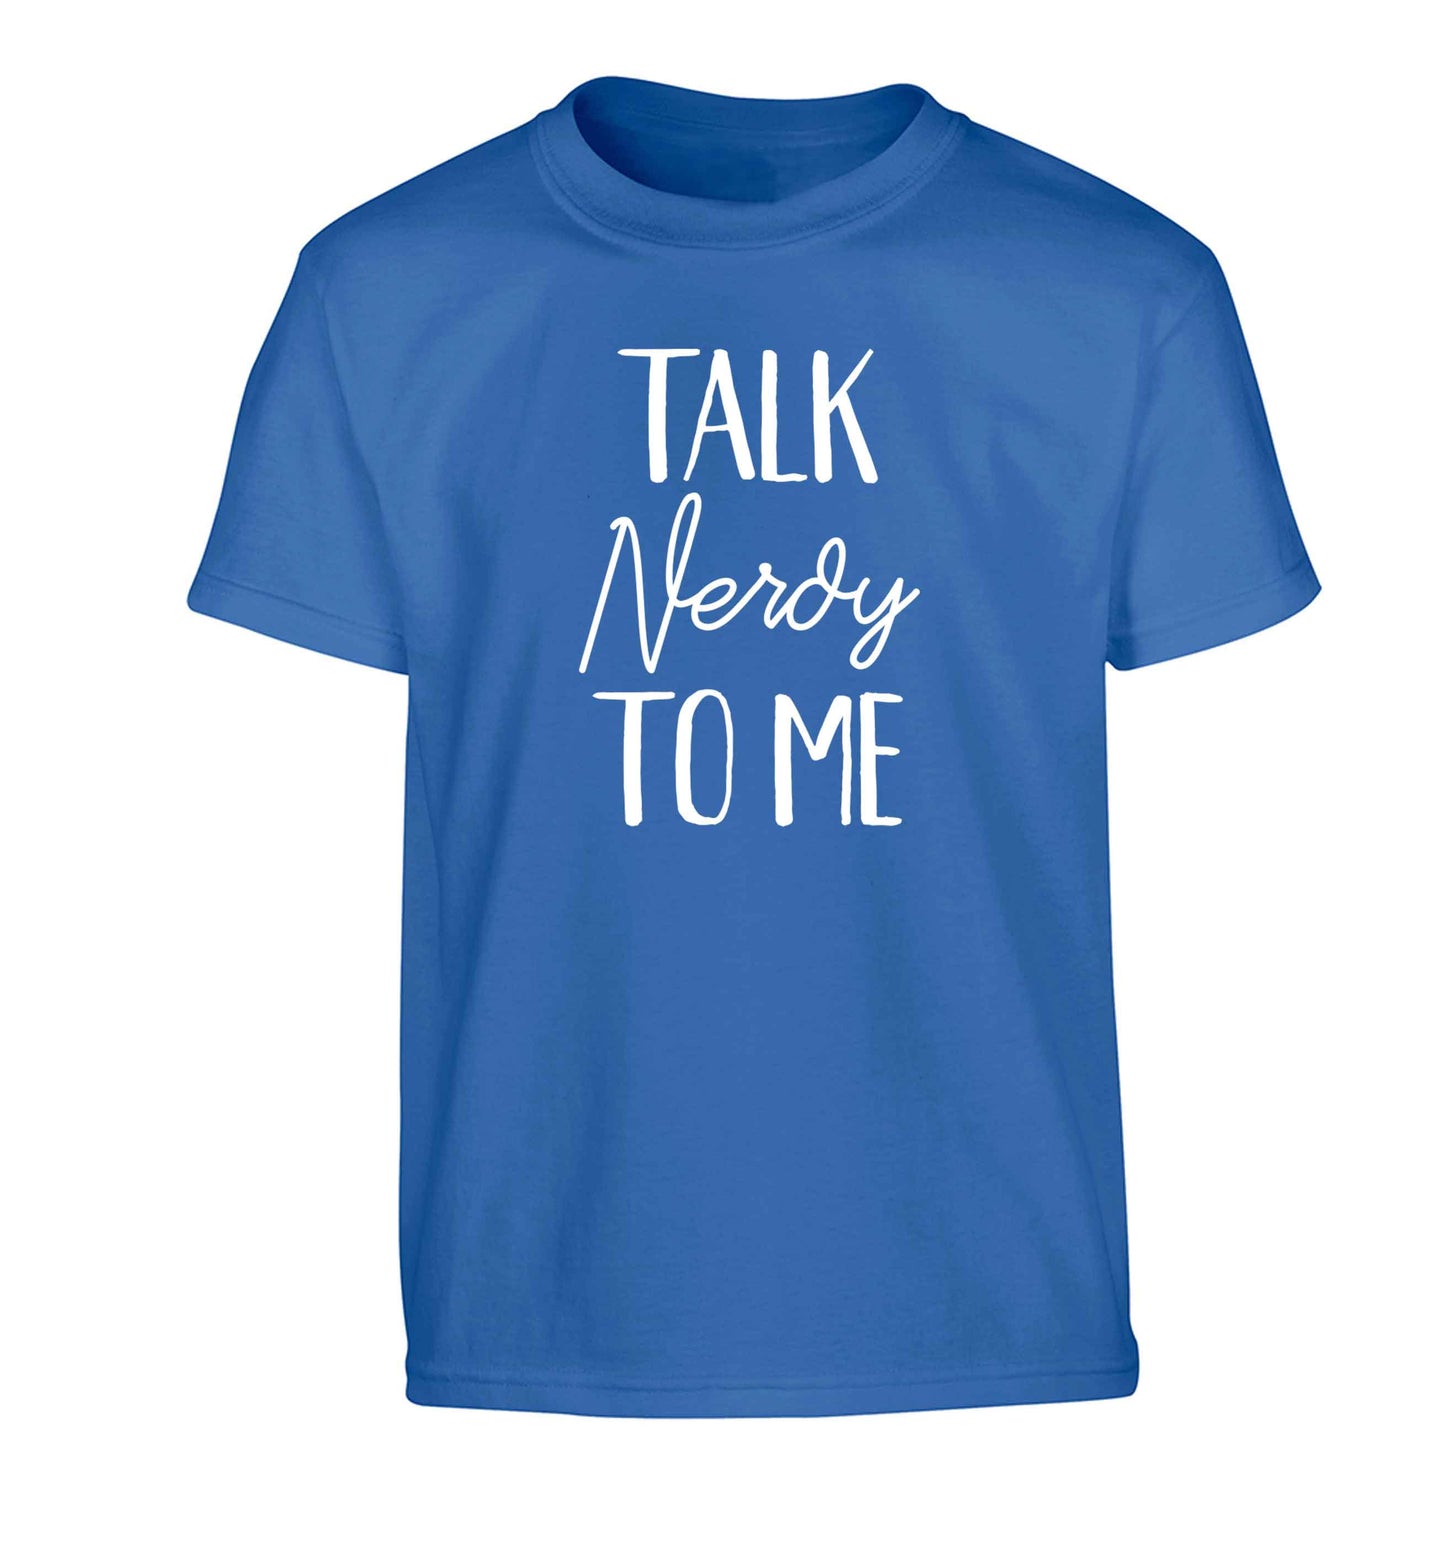 Talk nerdy to me Children's blue Tshirt 12-13 Years